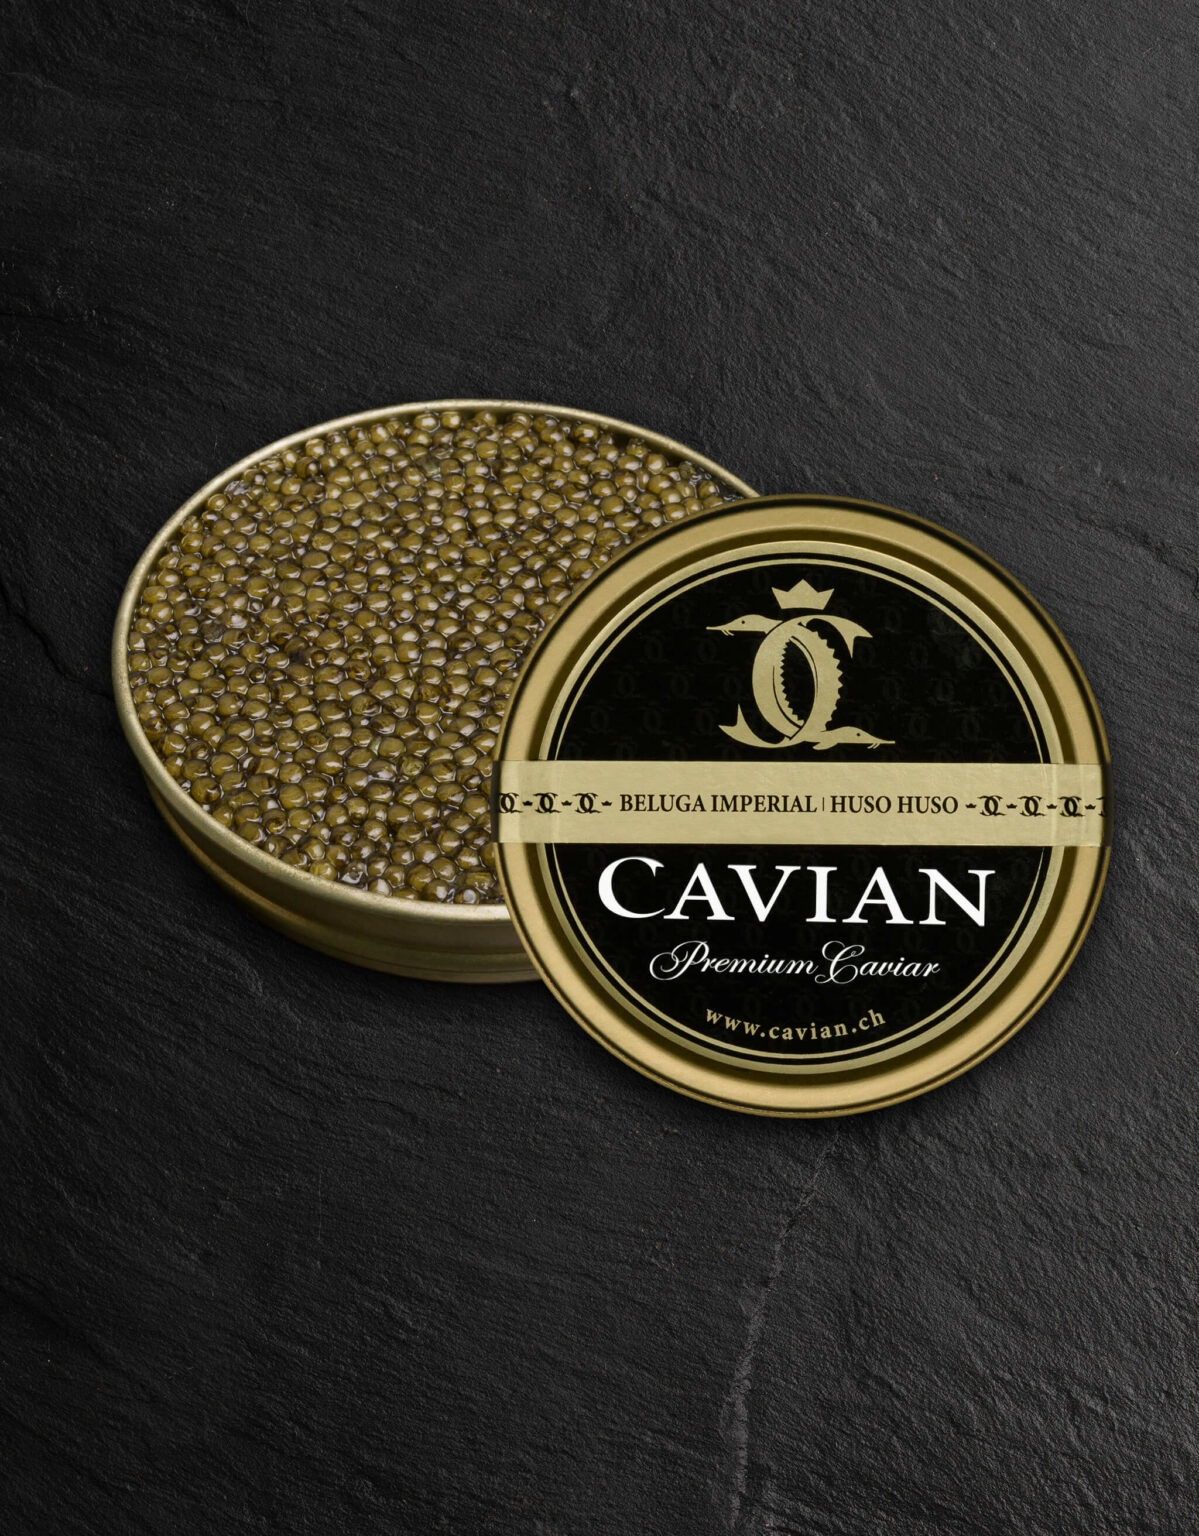 (c) Cavian.ch